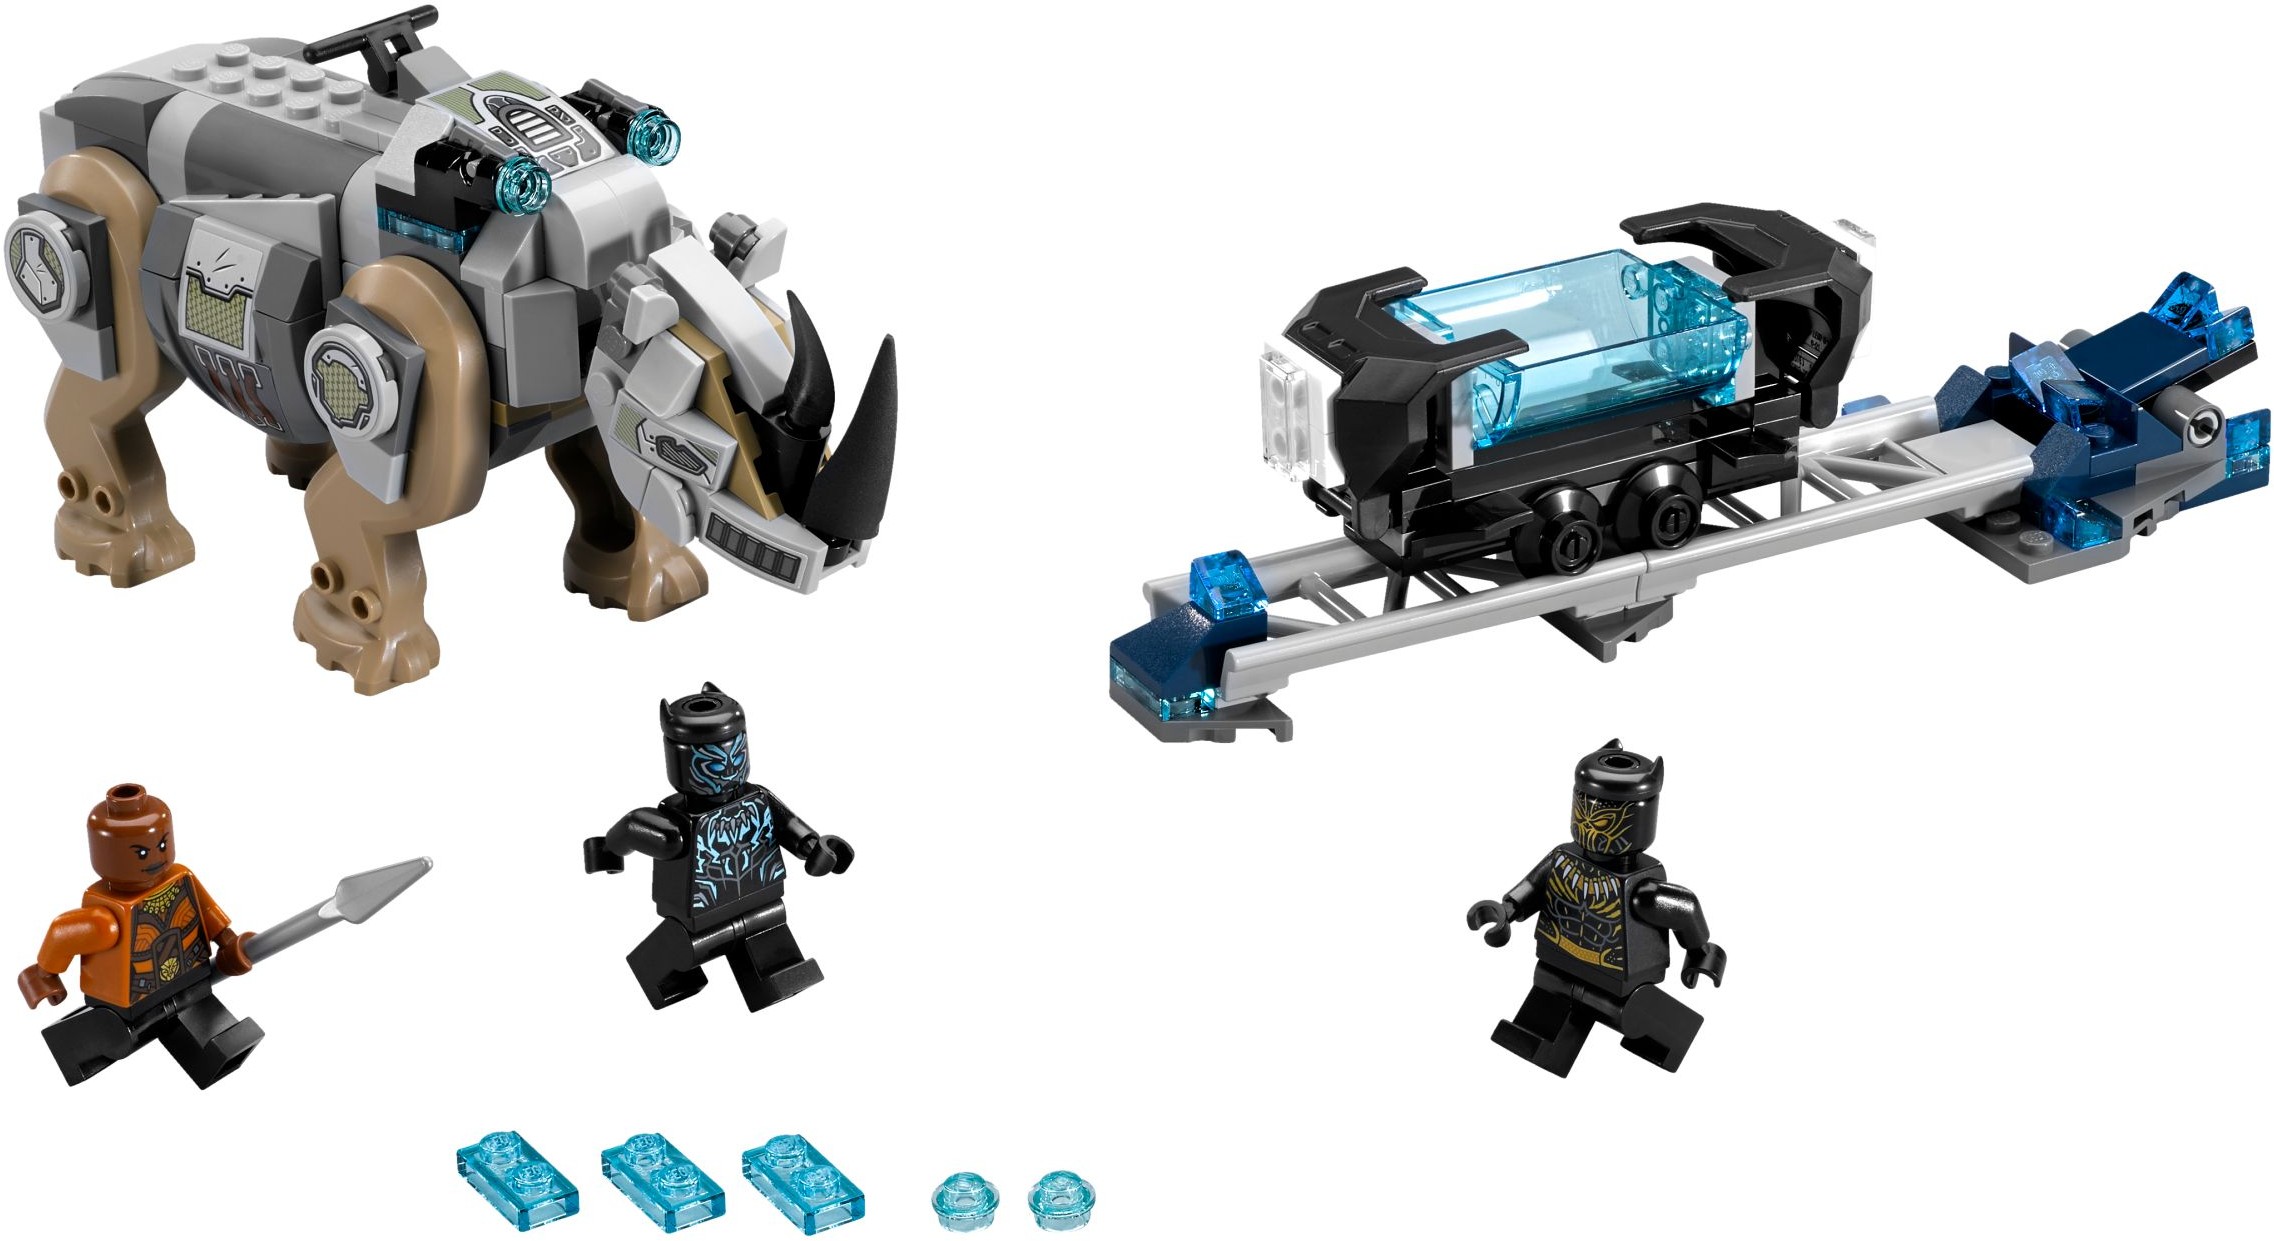  LEGO Marvel Super Heroes Black Panther Minifigure - Black  Panther Vibranium Suit (76099) : Toys & Games